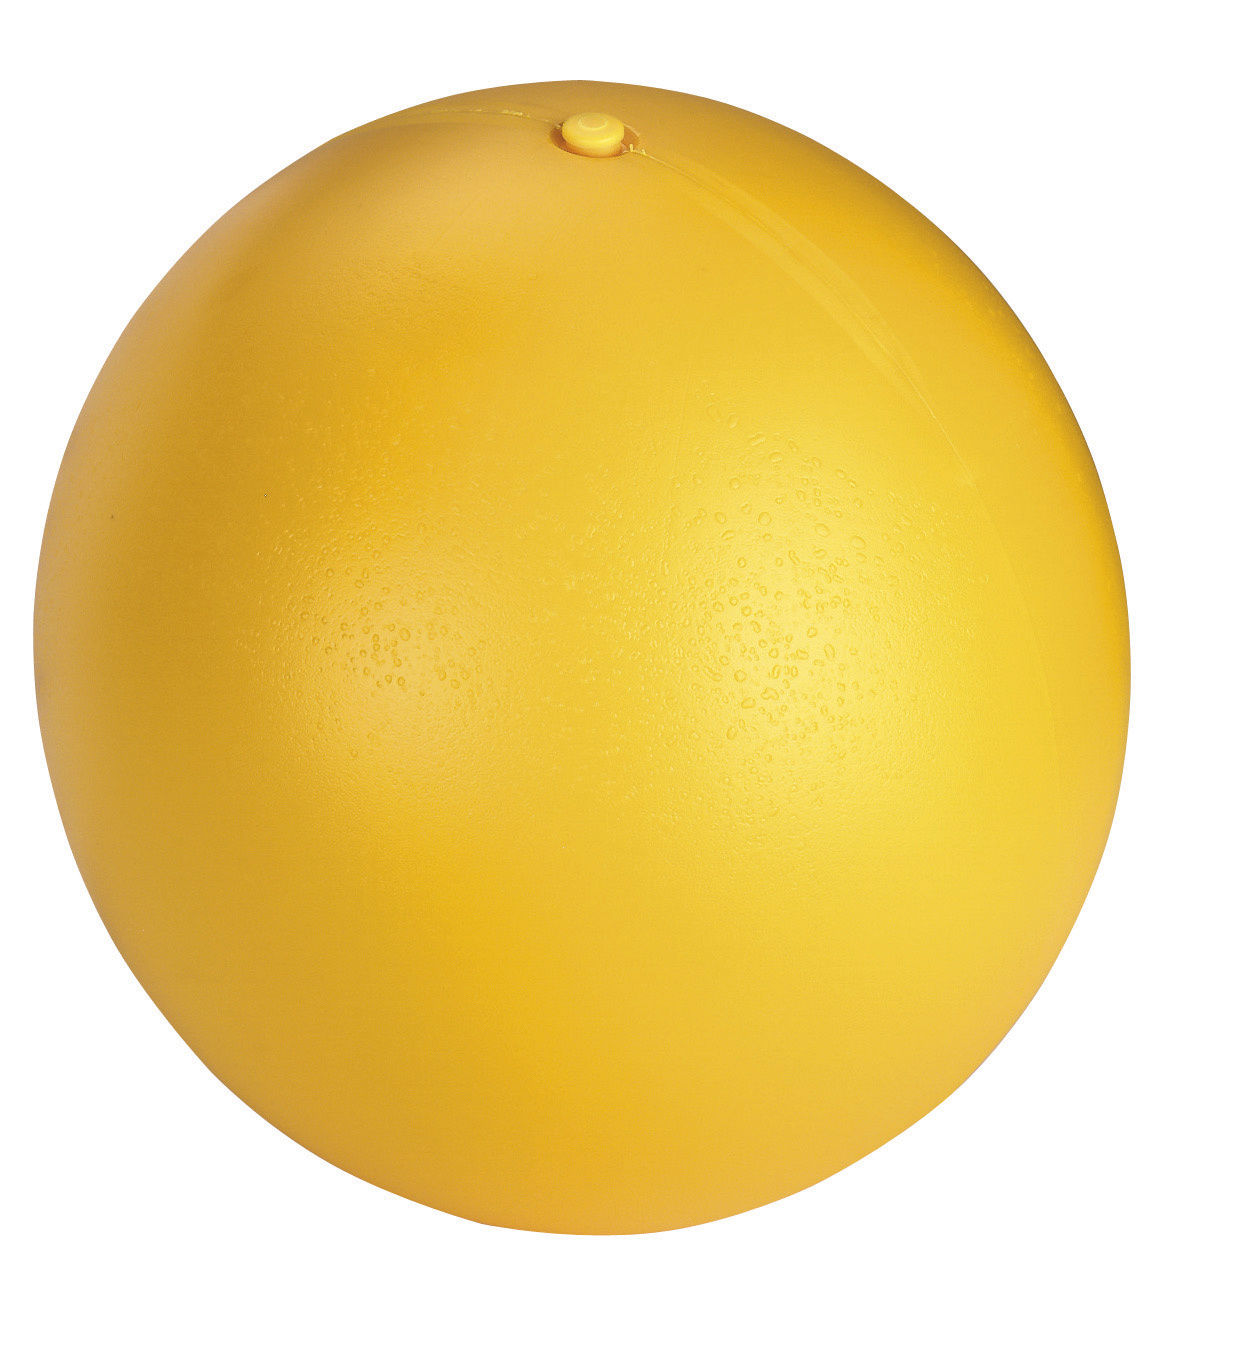 Hundespielball Ø 30 cm, gelb, aus Kunststoff